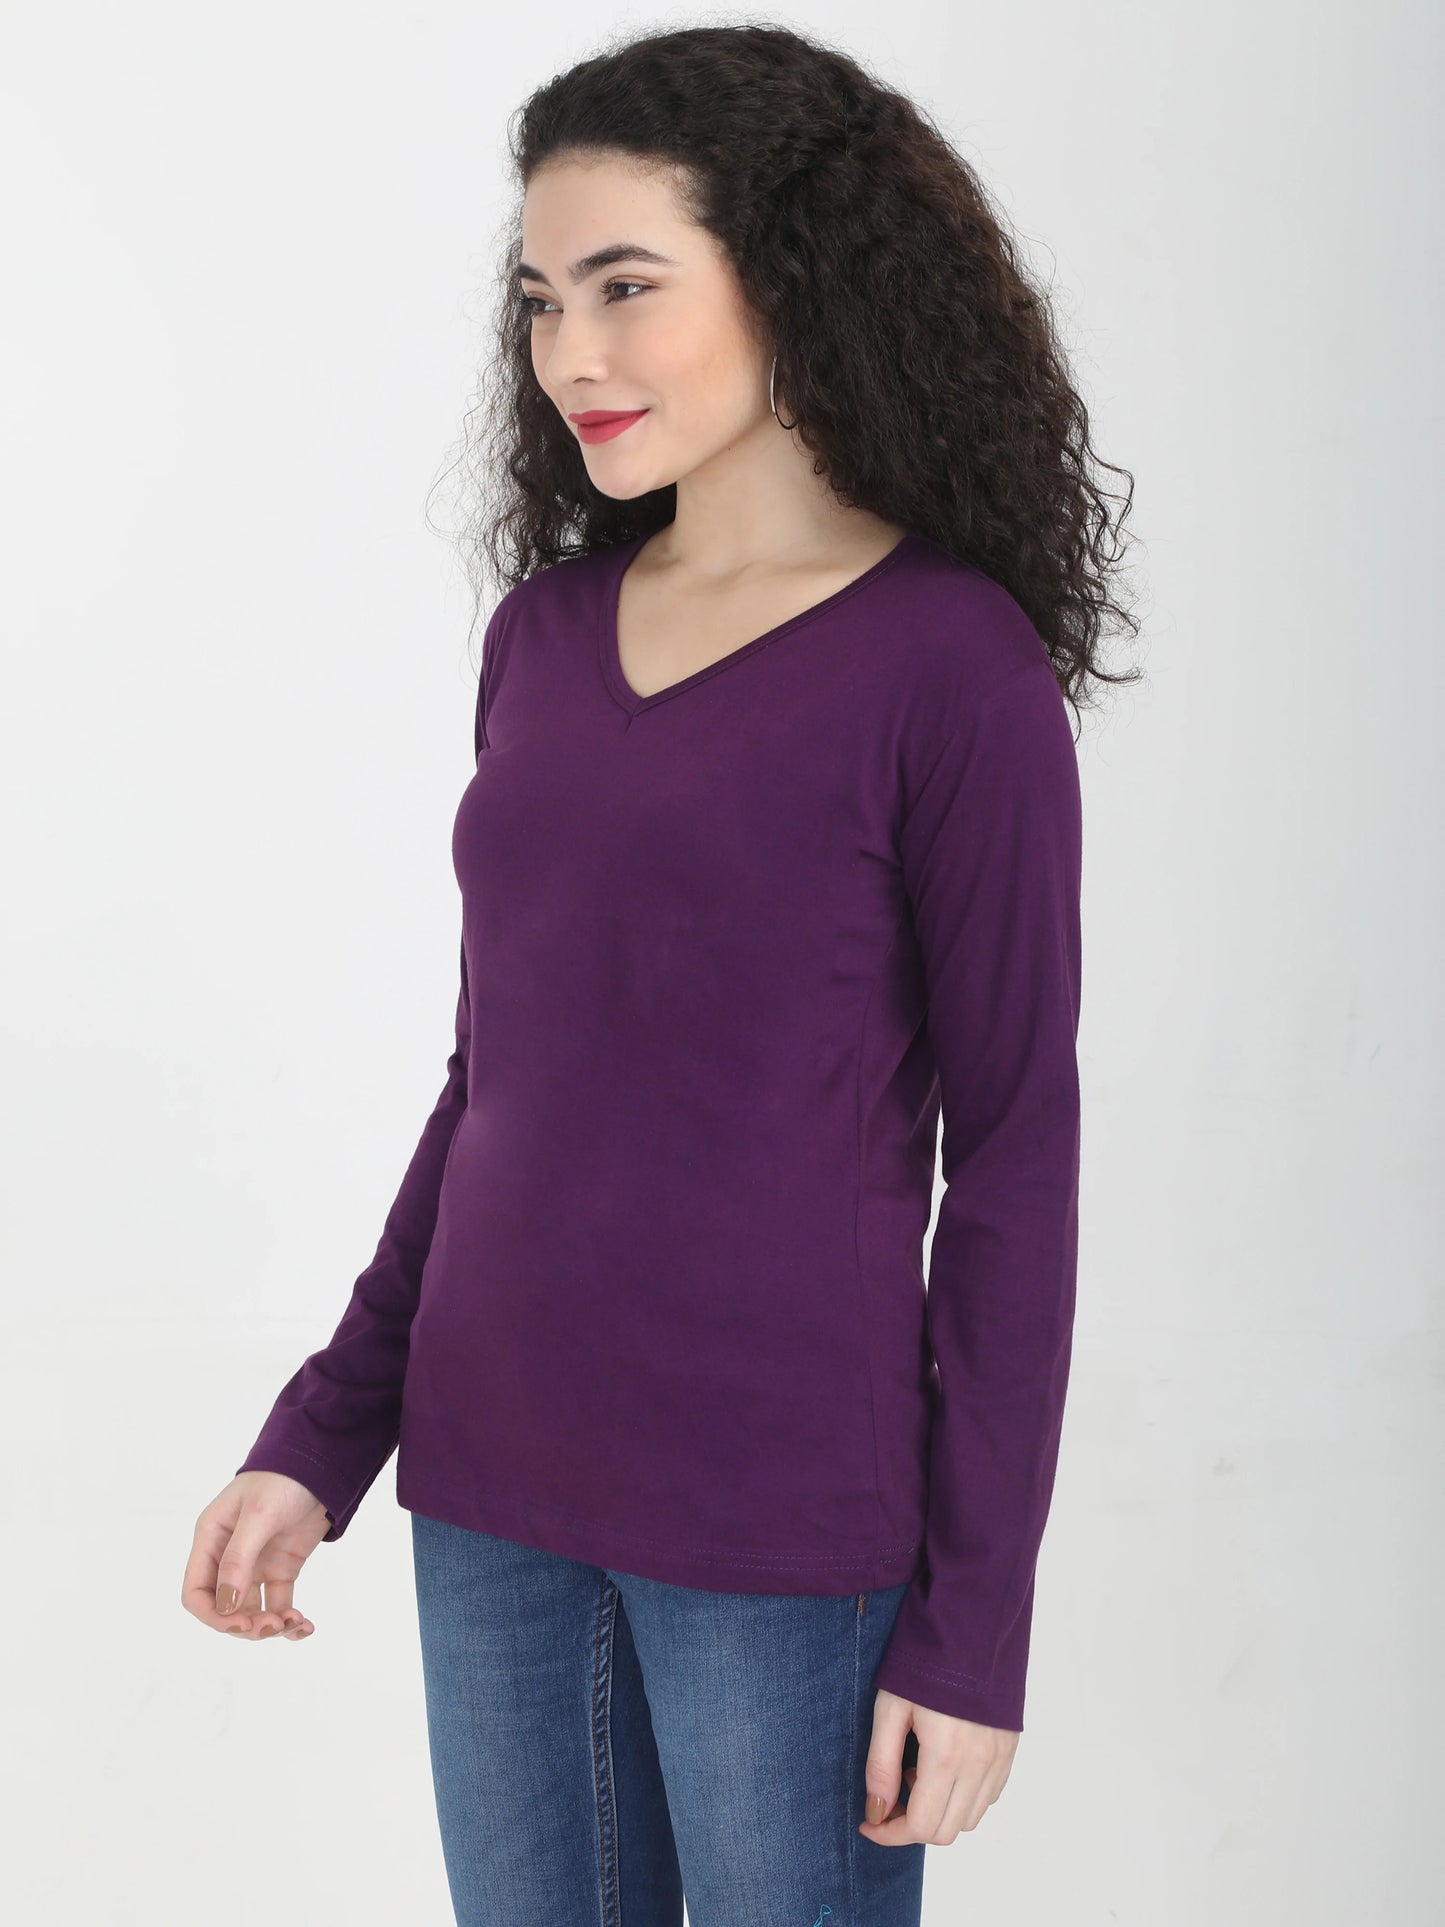 Women's Cotton Plain V Neck Full Sleeve Purple Color T-Shirt